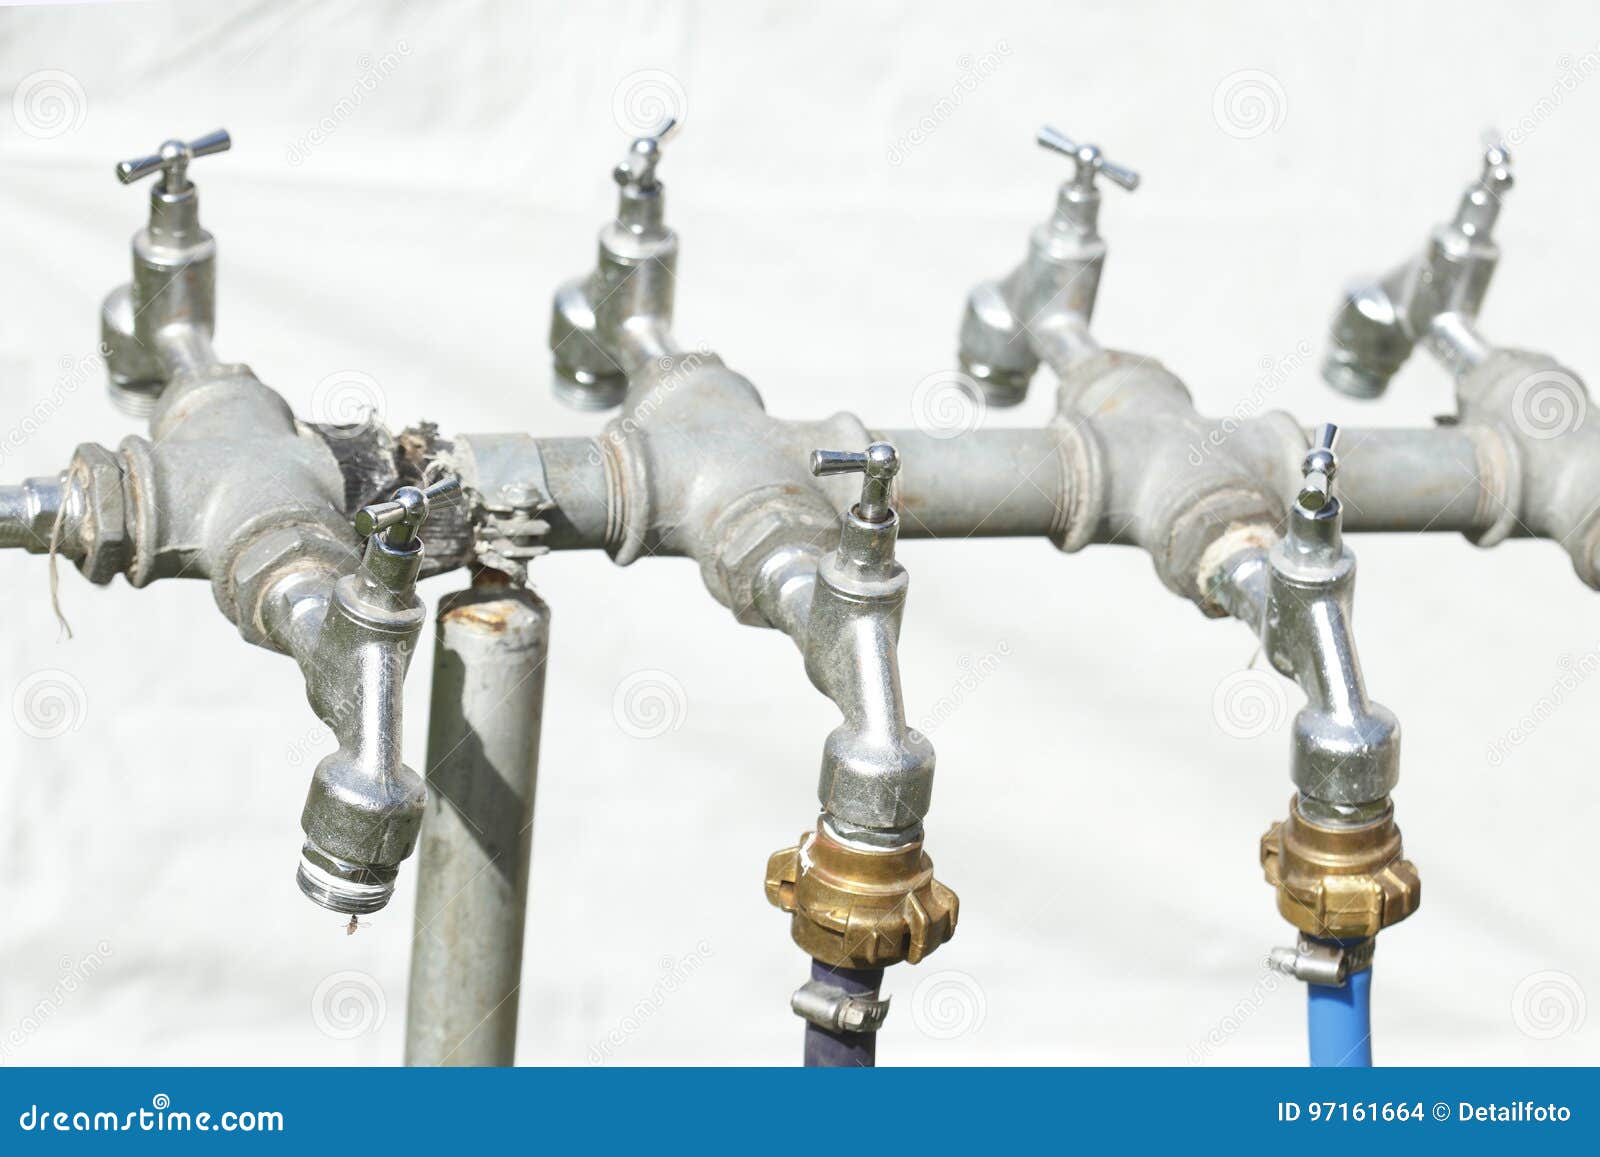 silver-metal-outside-water-taps-multiple